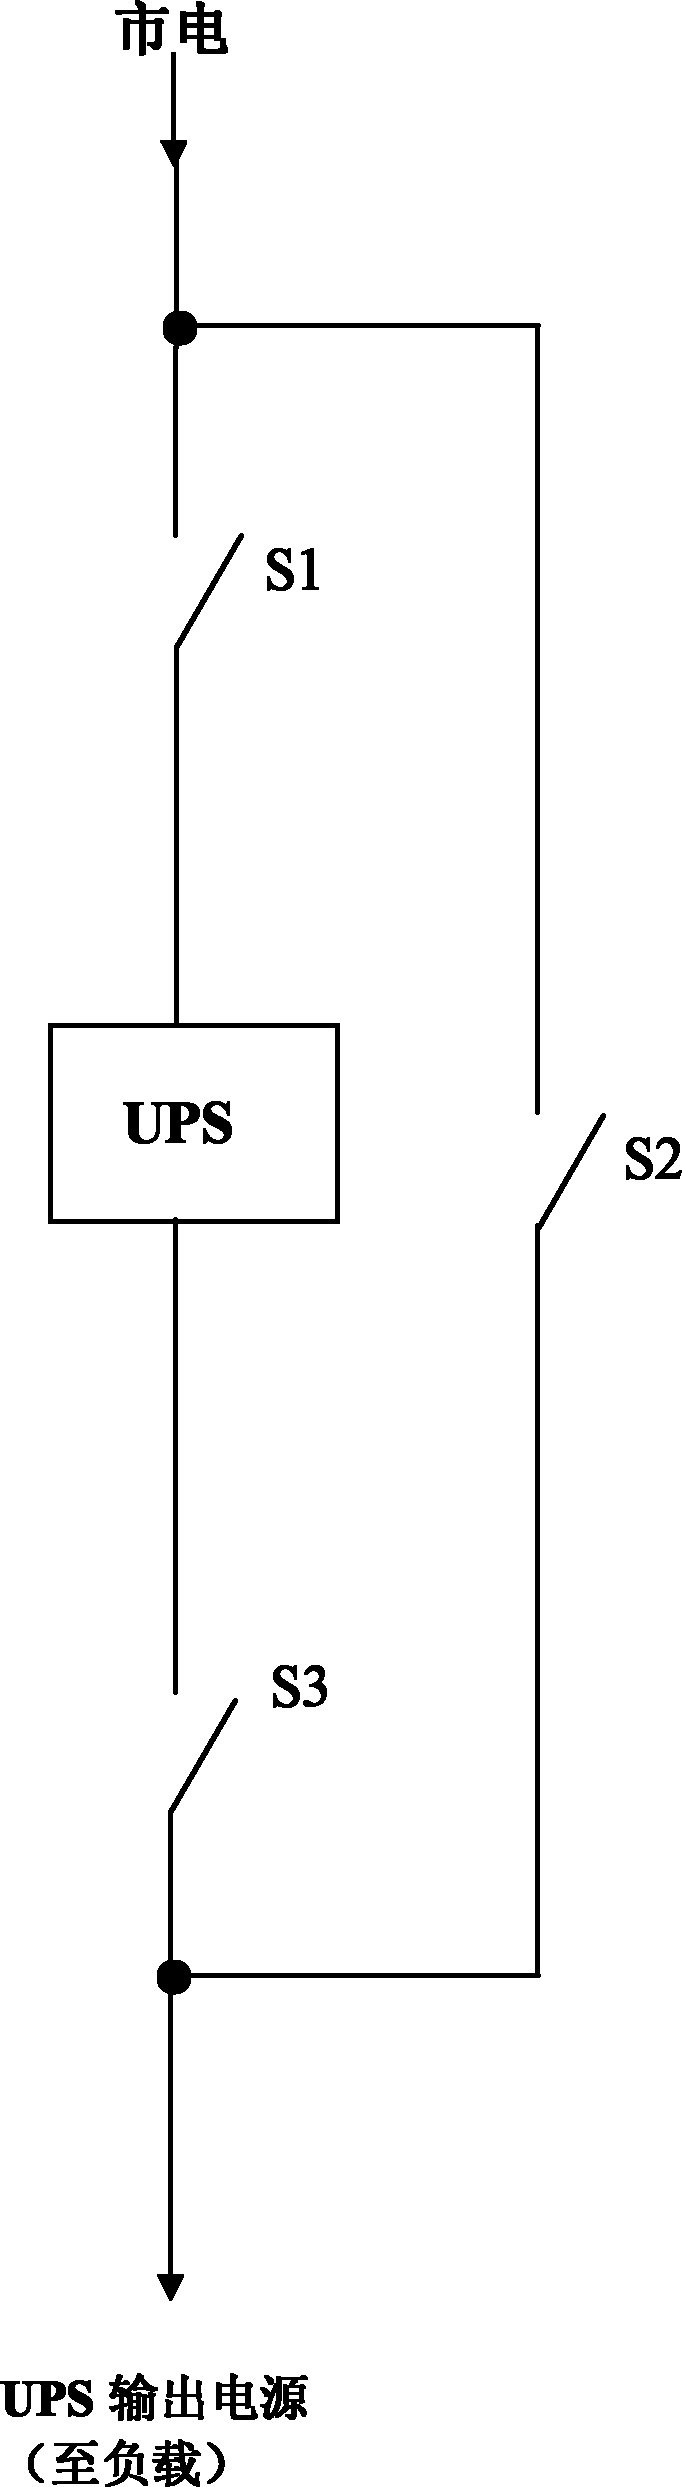 Test method for external bypass of uninterrupted power supply (UPS)